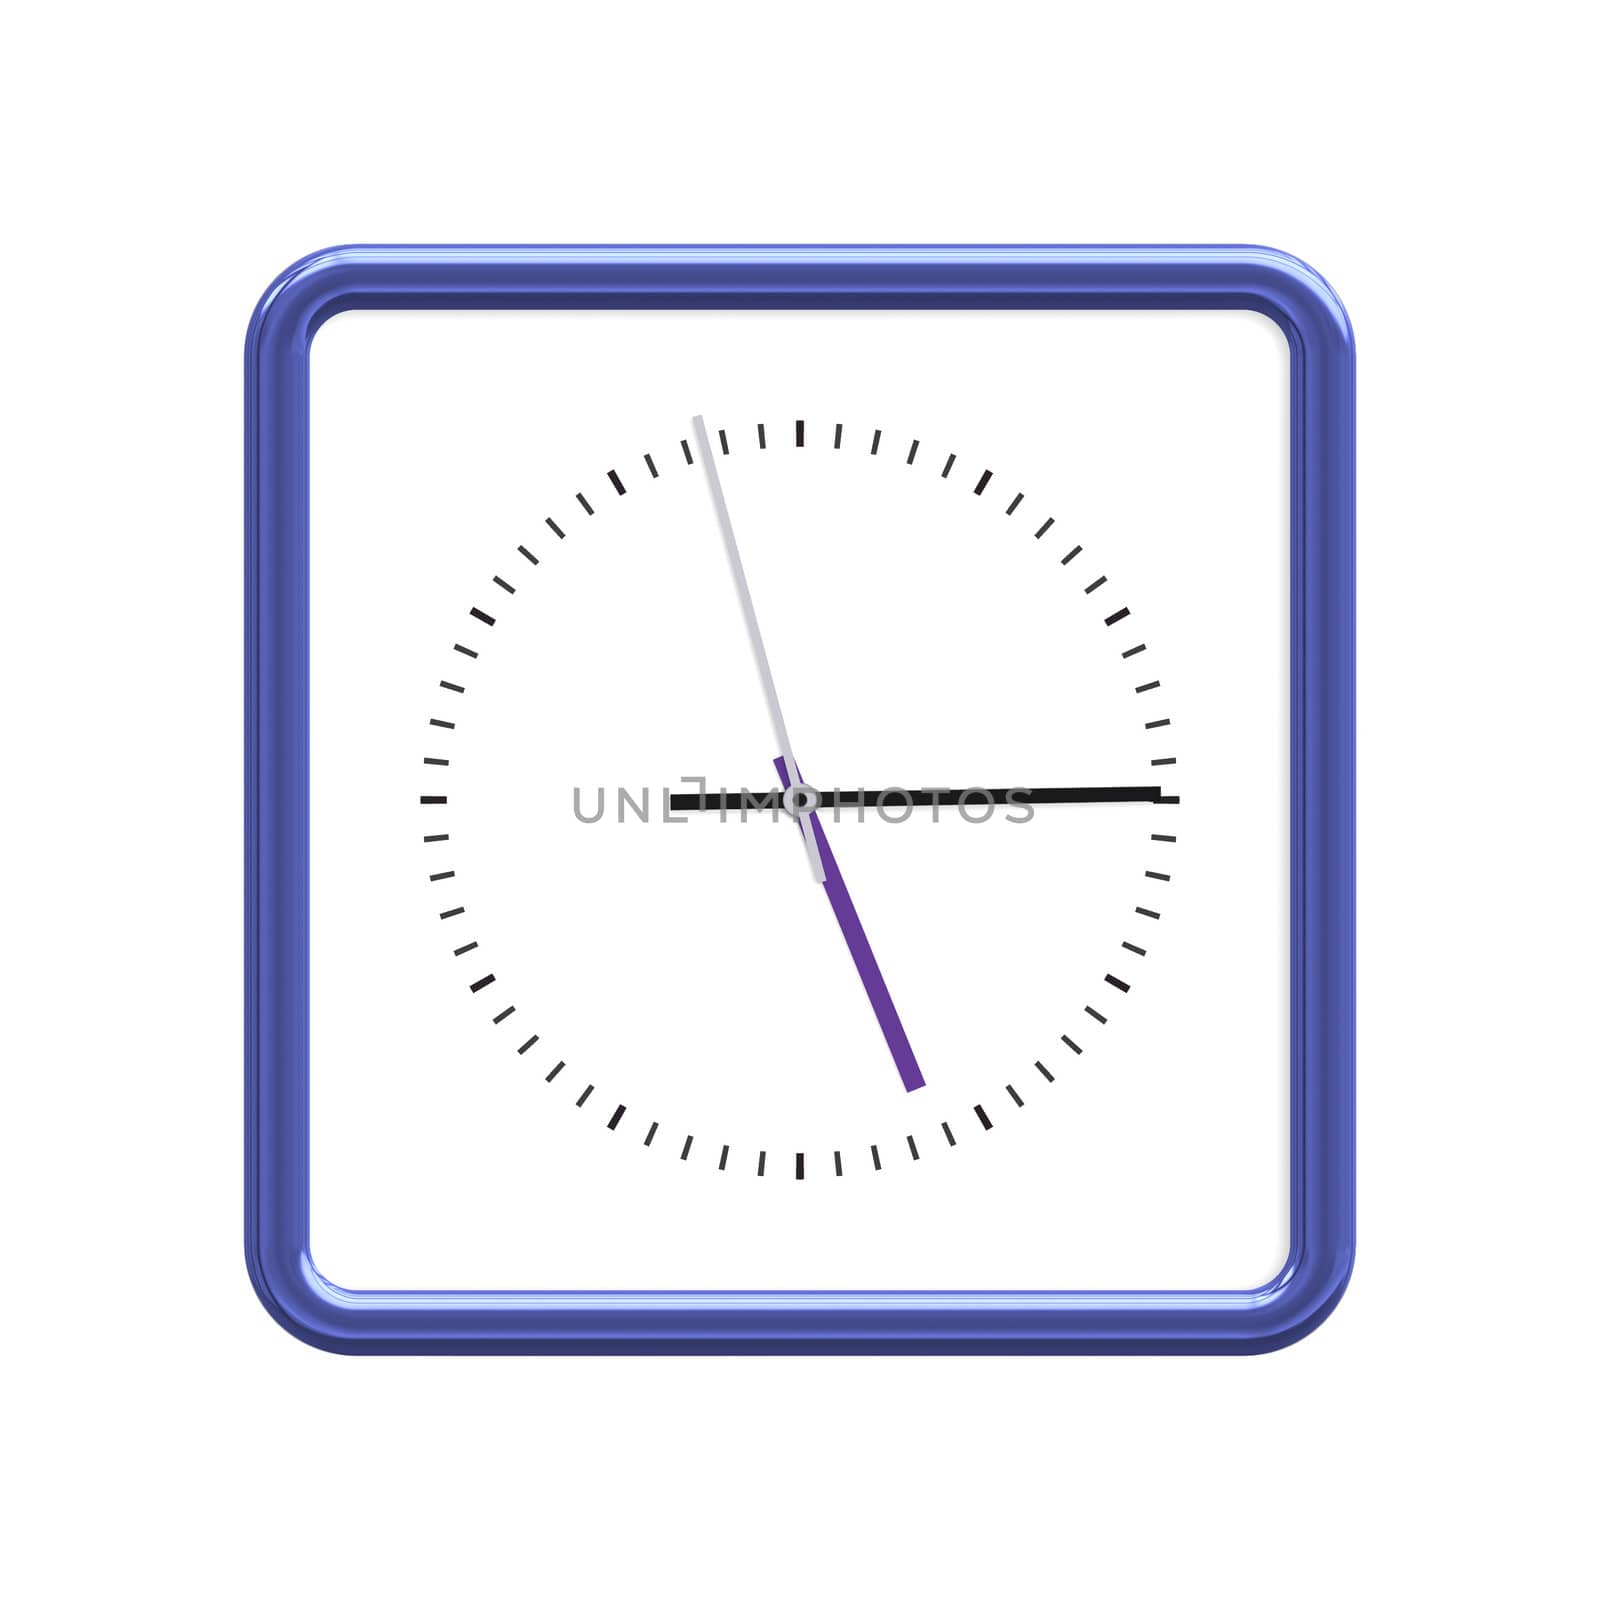 An image of a nice blue clock